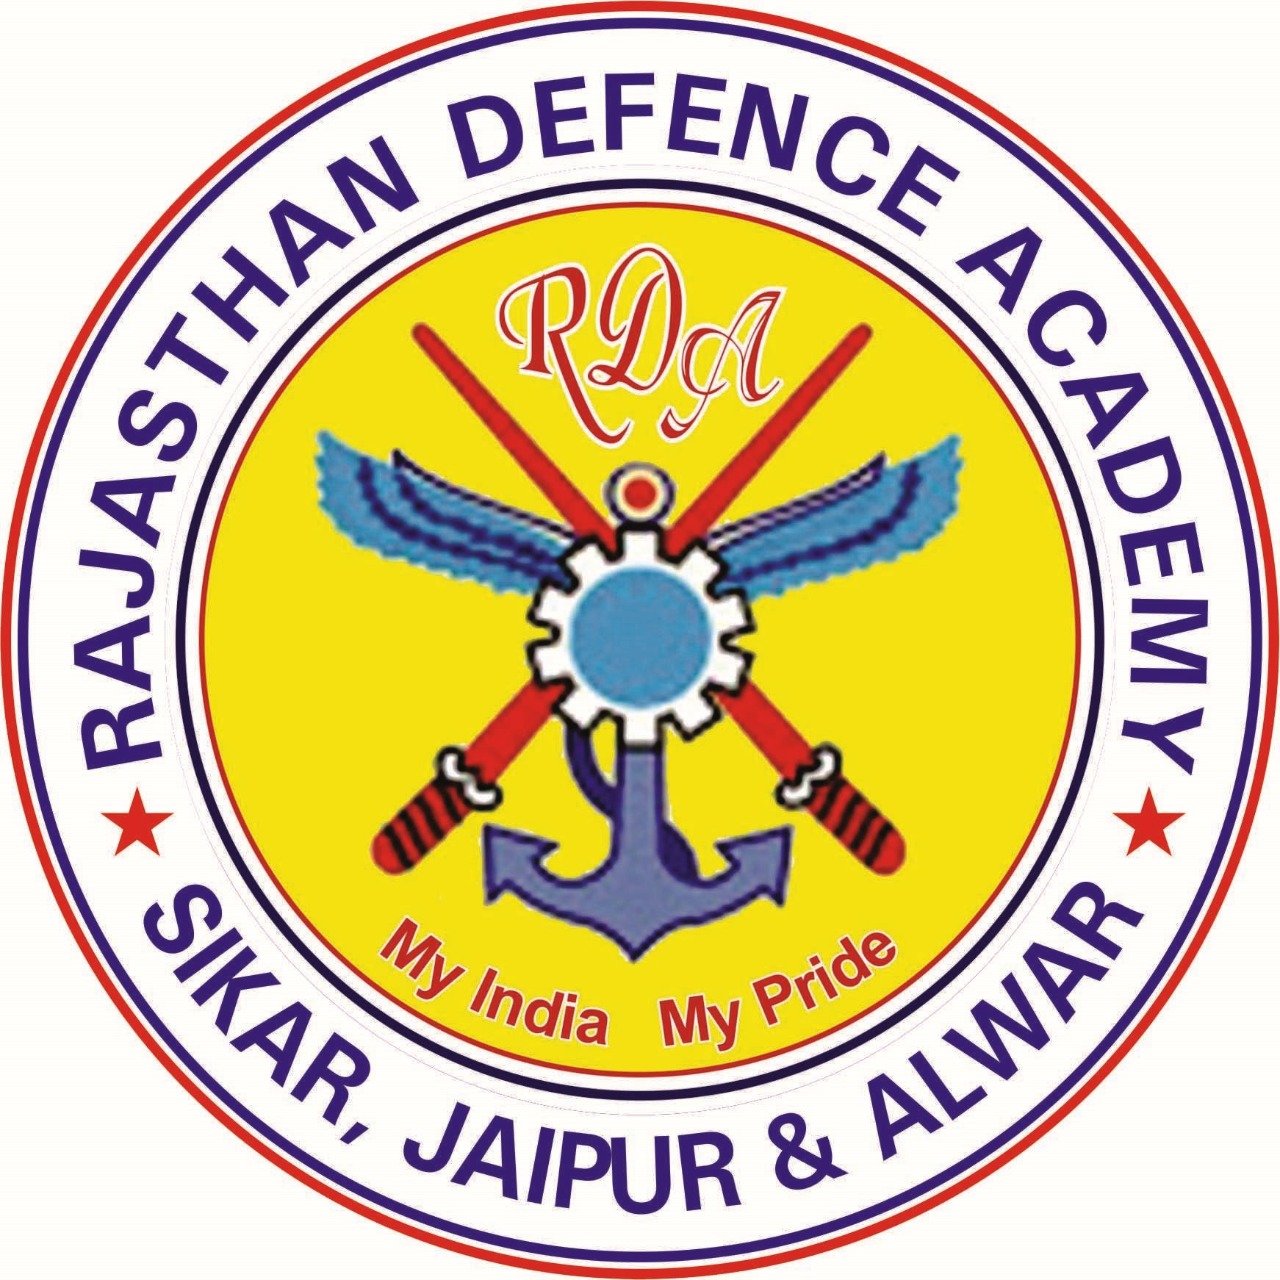 RAJASTHAN DEFENCE ACADEMY logo